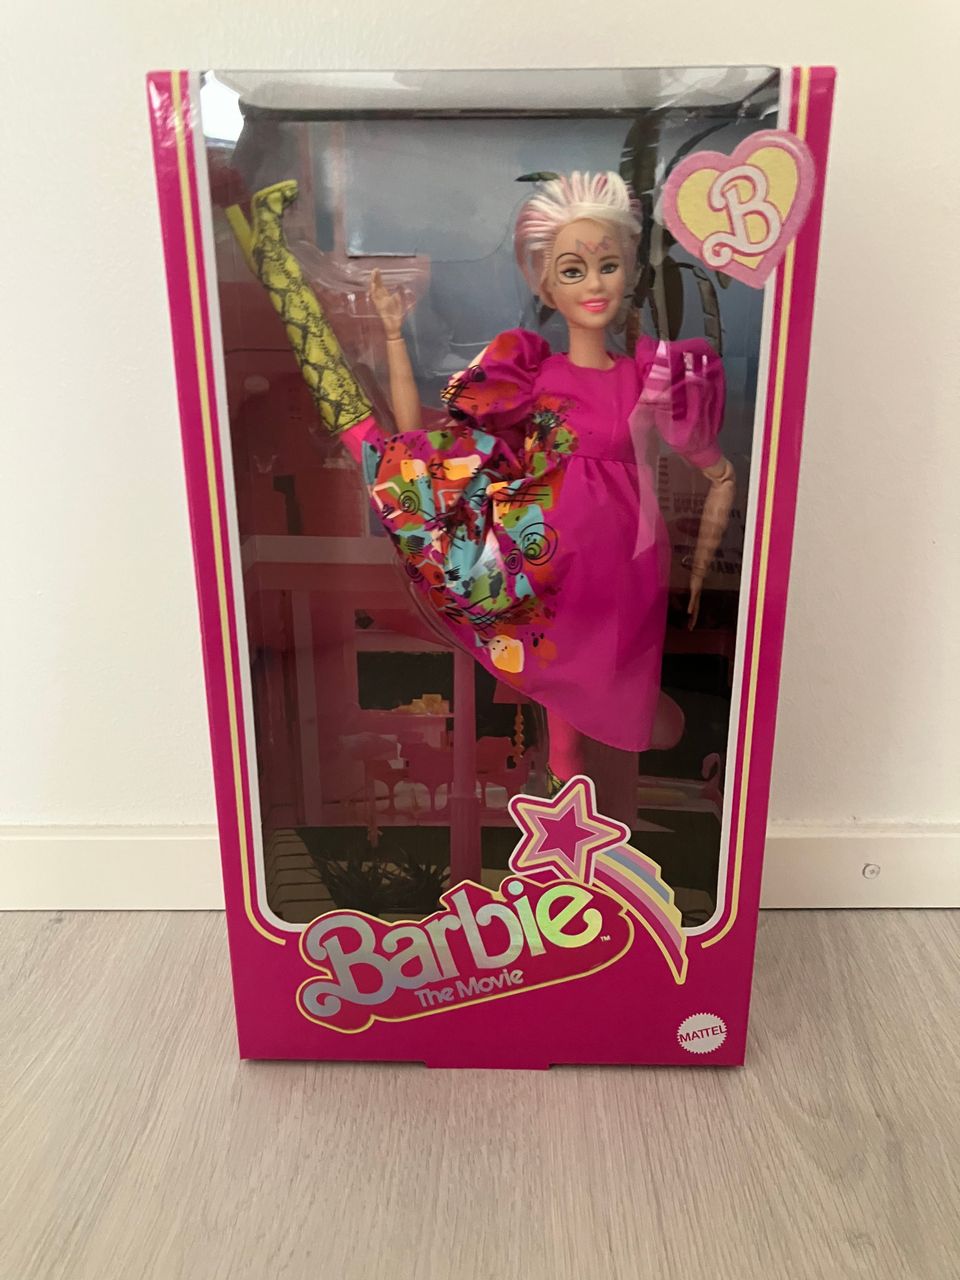 Weird Barbie UUSI